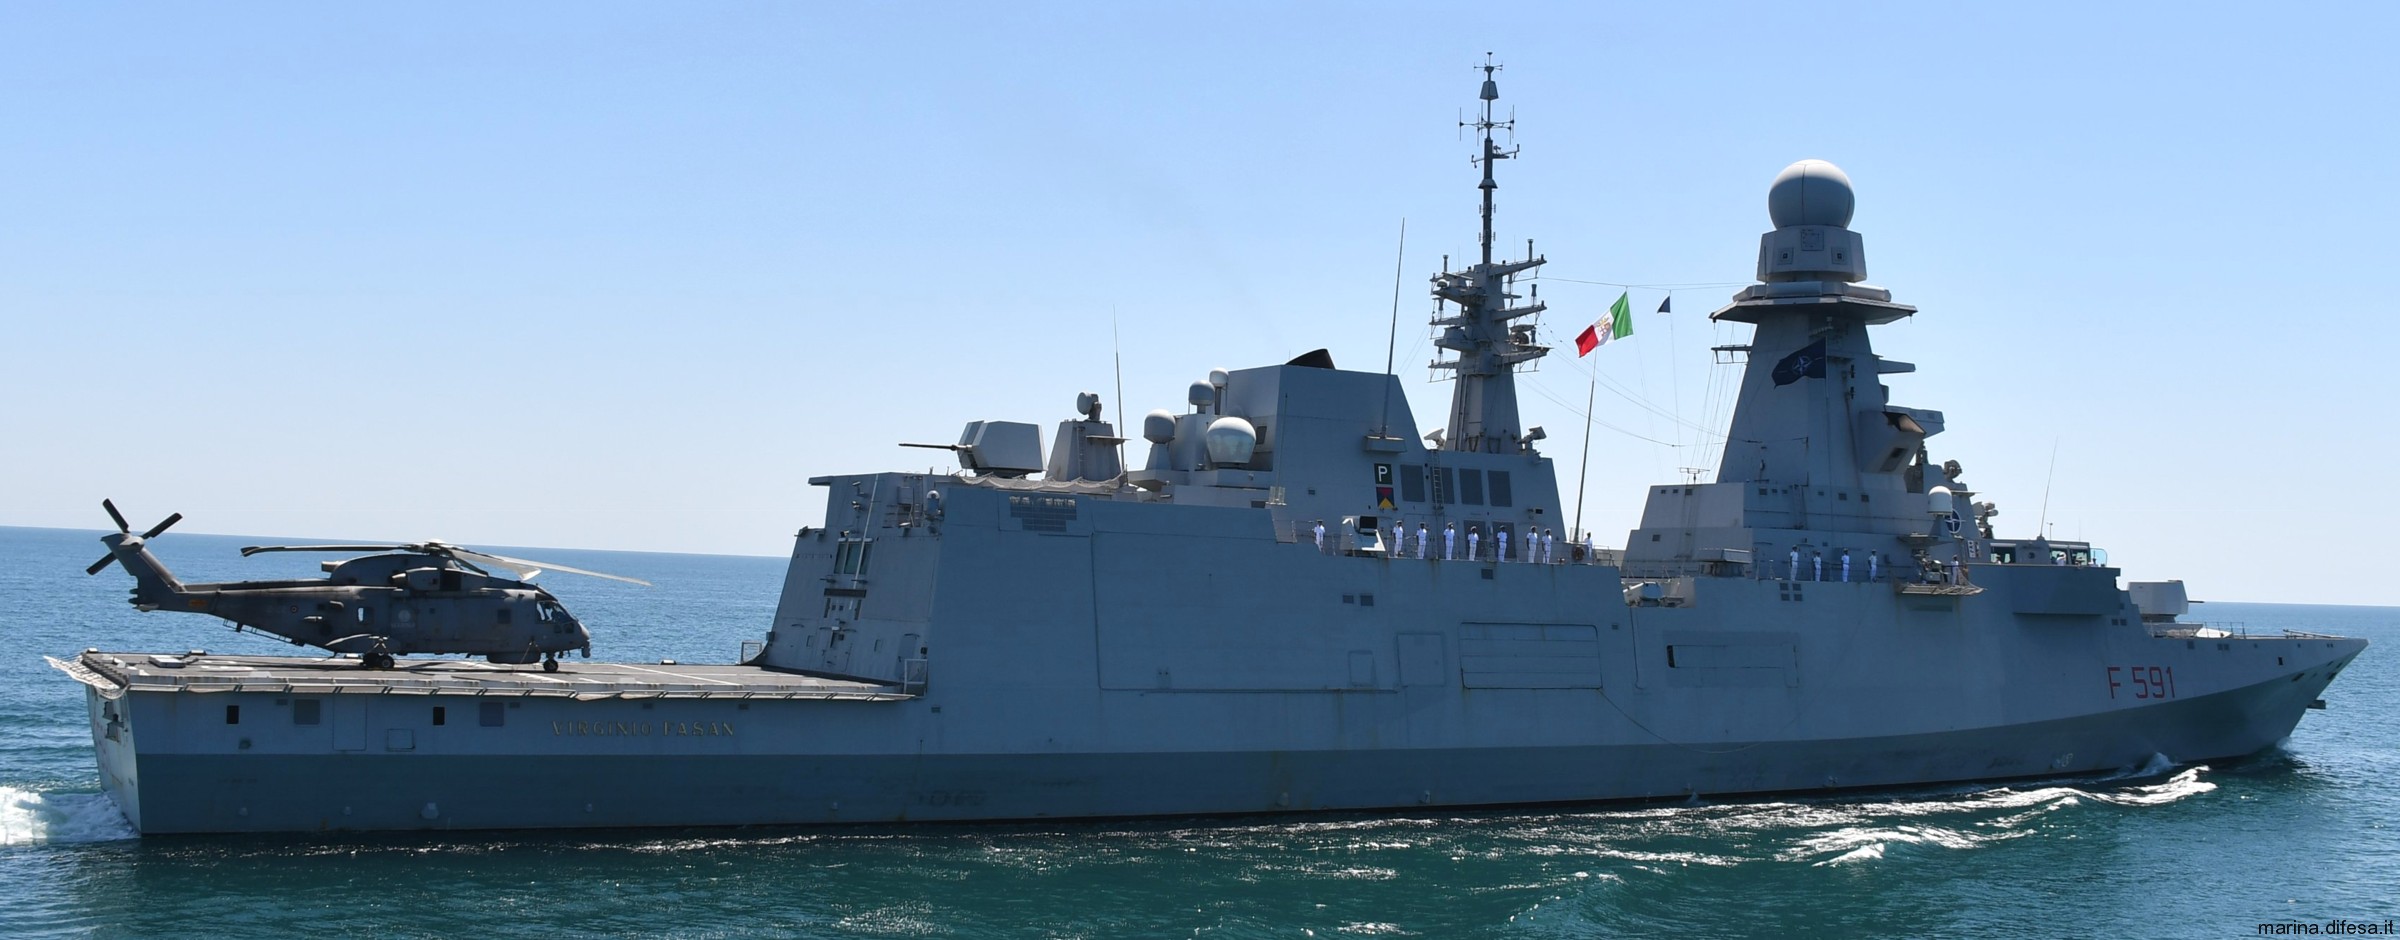 f-591 virginio fasan its nave bergamini fremm class guided missile frigate italian navy marina militare 49